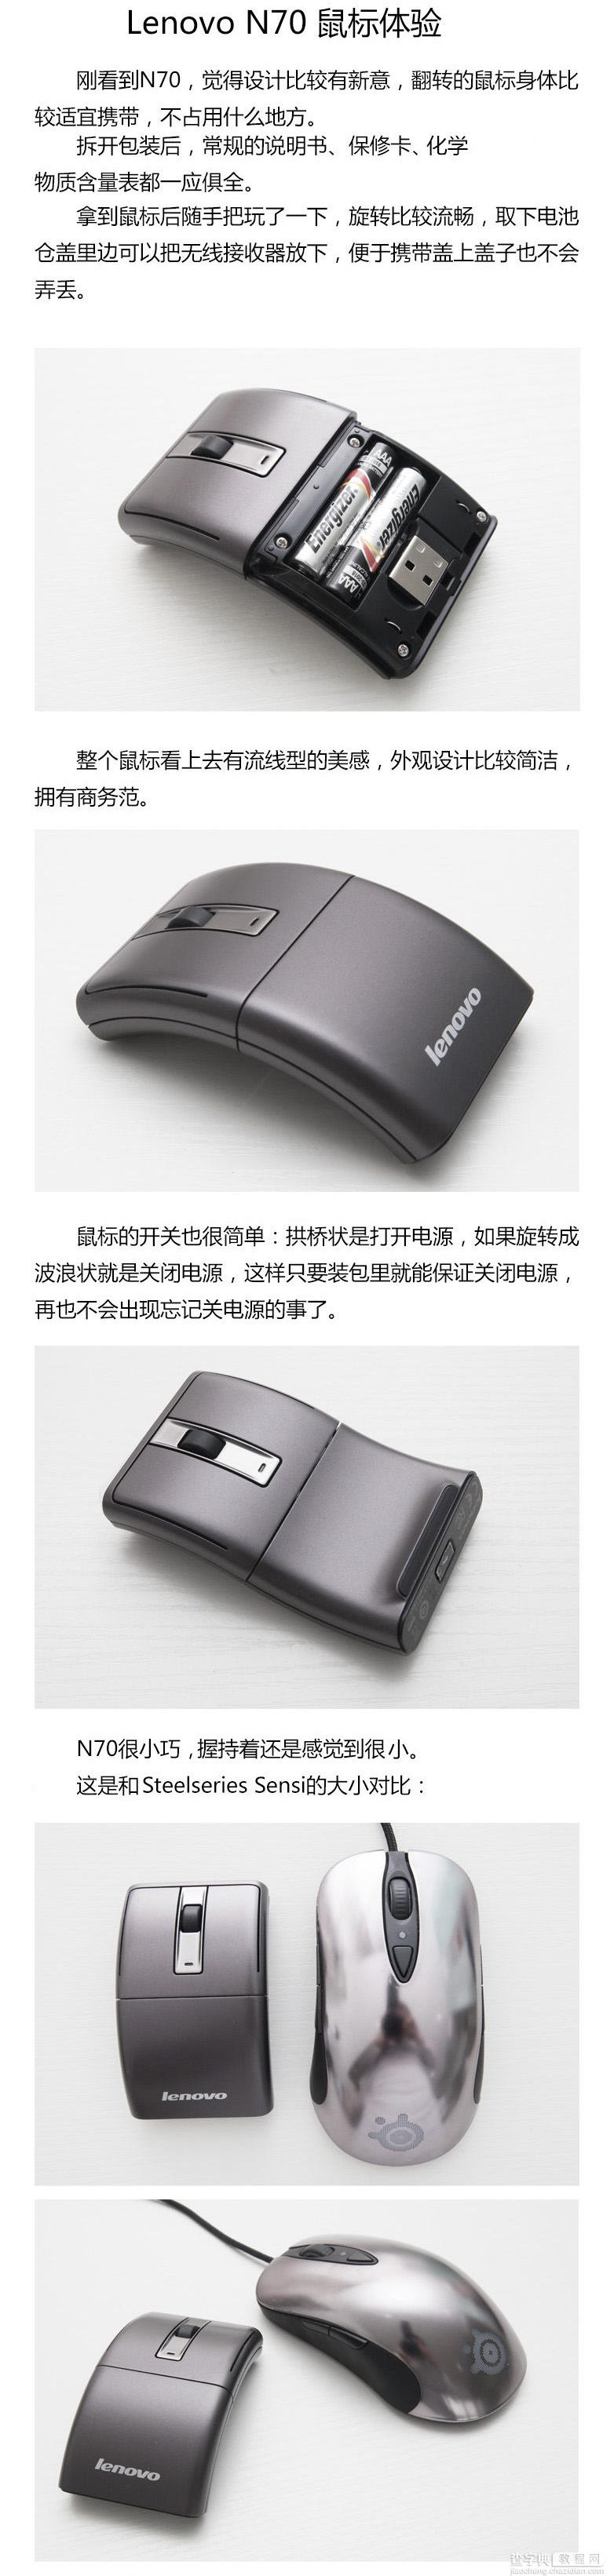 Lenovo联想2.4G无线鼠标N70全面图文详解10